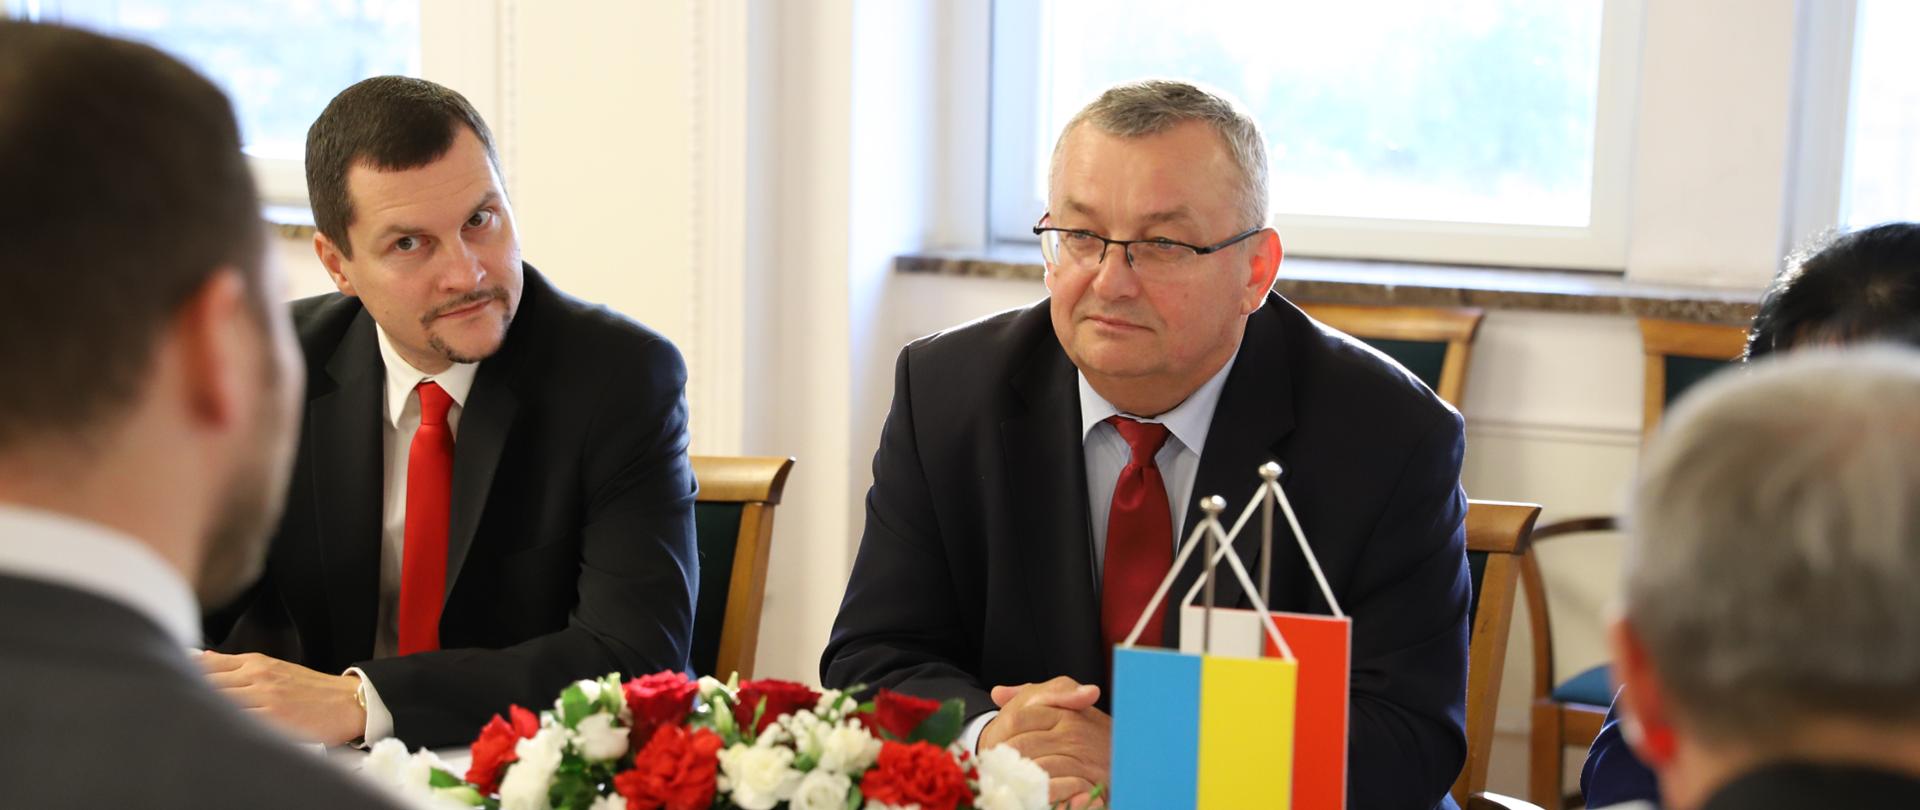 Minister infrastruktury A. Adamczyk spotkał się z ministrem infrastruktury Ukrainy - Vladyslavem Kriklijem